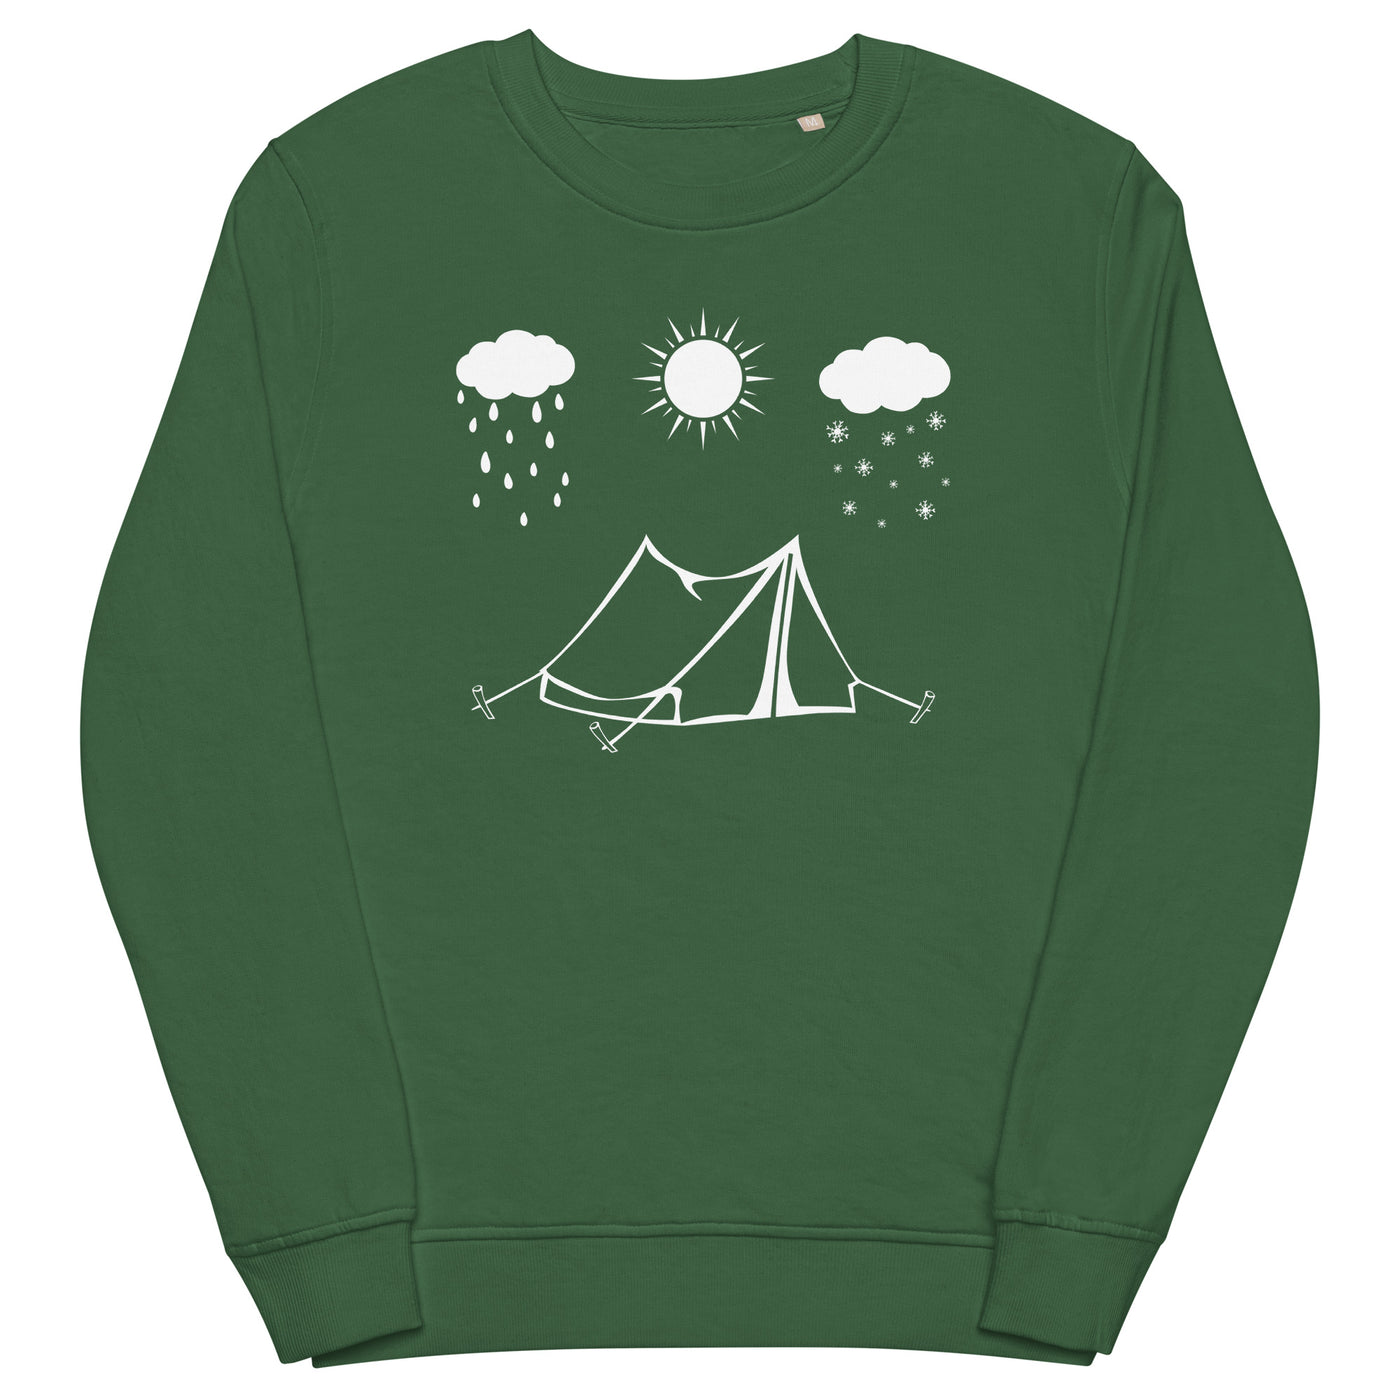 All Seasons And Camping - Unisex Premium Organic Sweatshirt camping Bottle Green